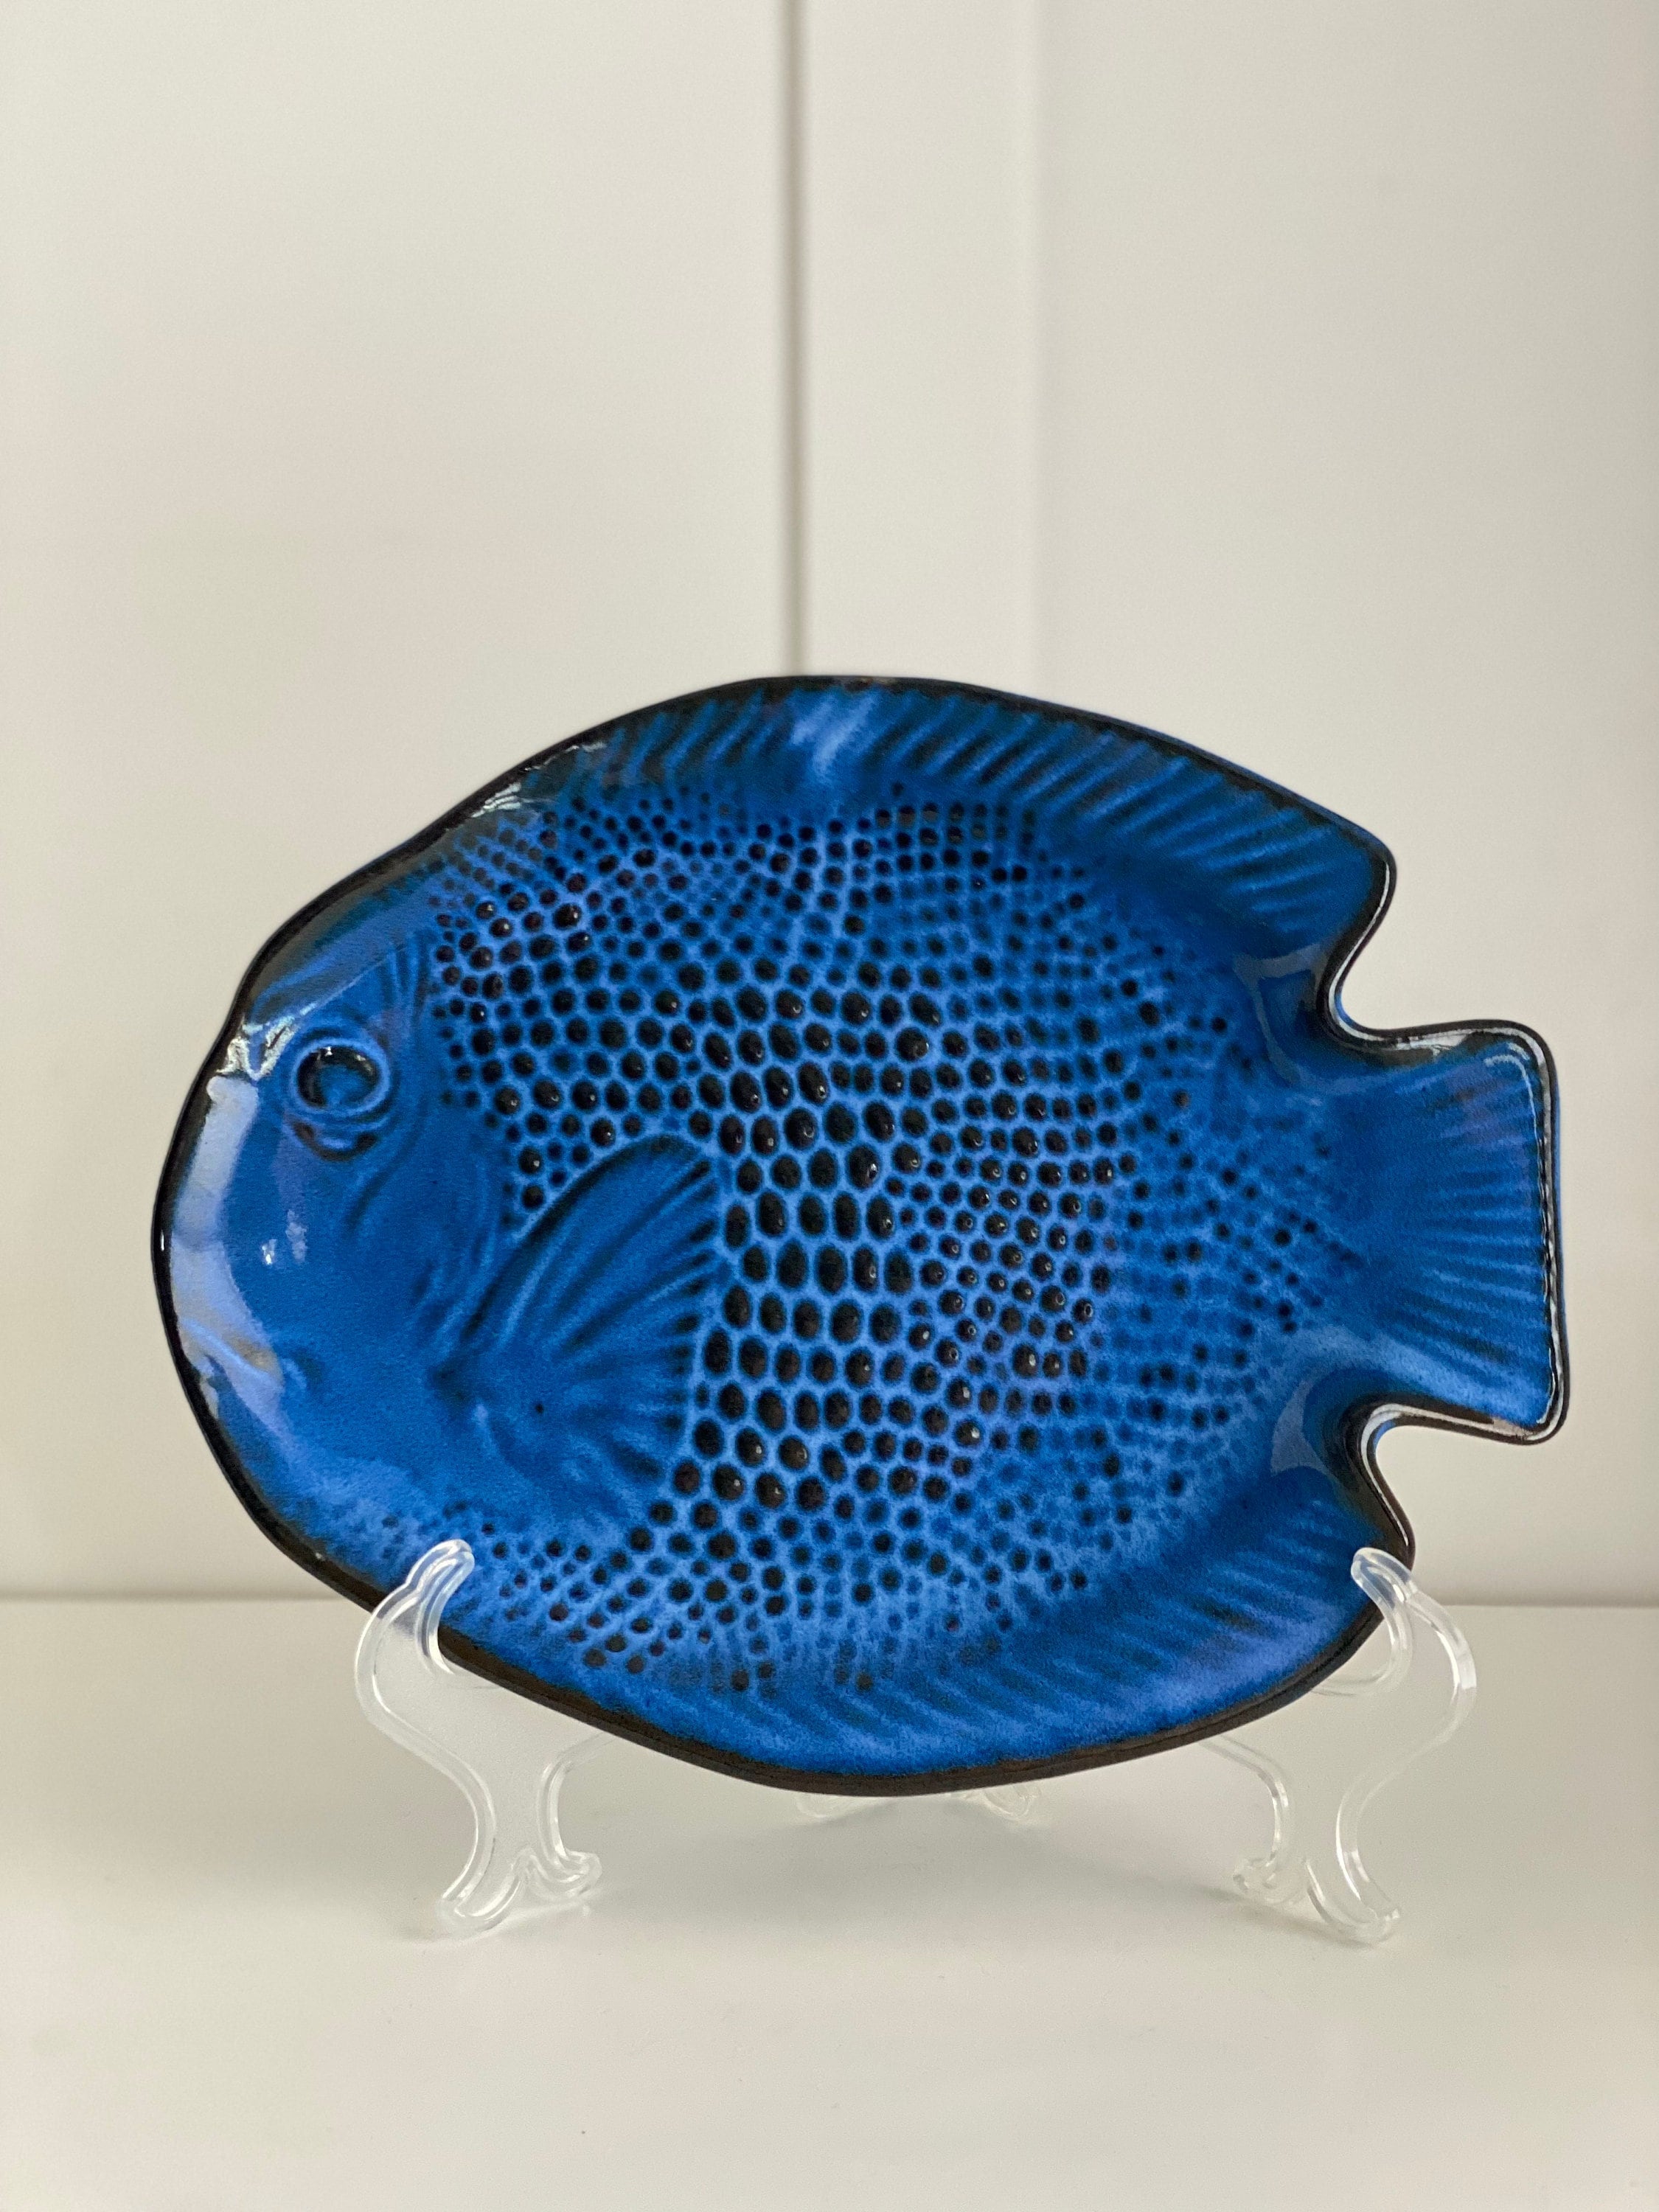 Japanece ceramic Grain bamboo 6.0 length angle dish tableware Grilled Fish Plate utw157-26-714 6.7 x 4.6 x 1 inch 